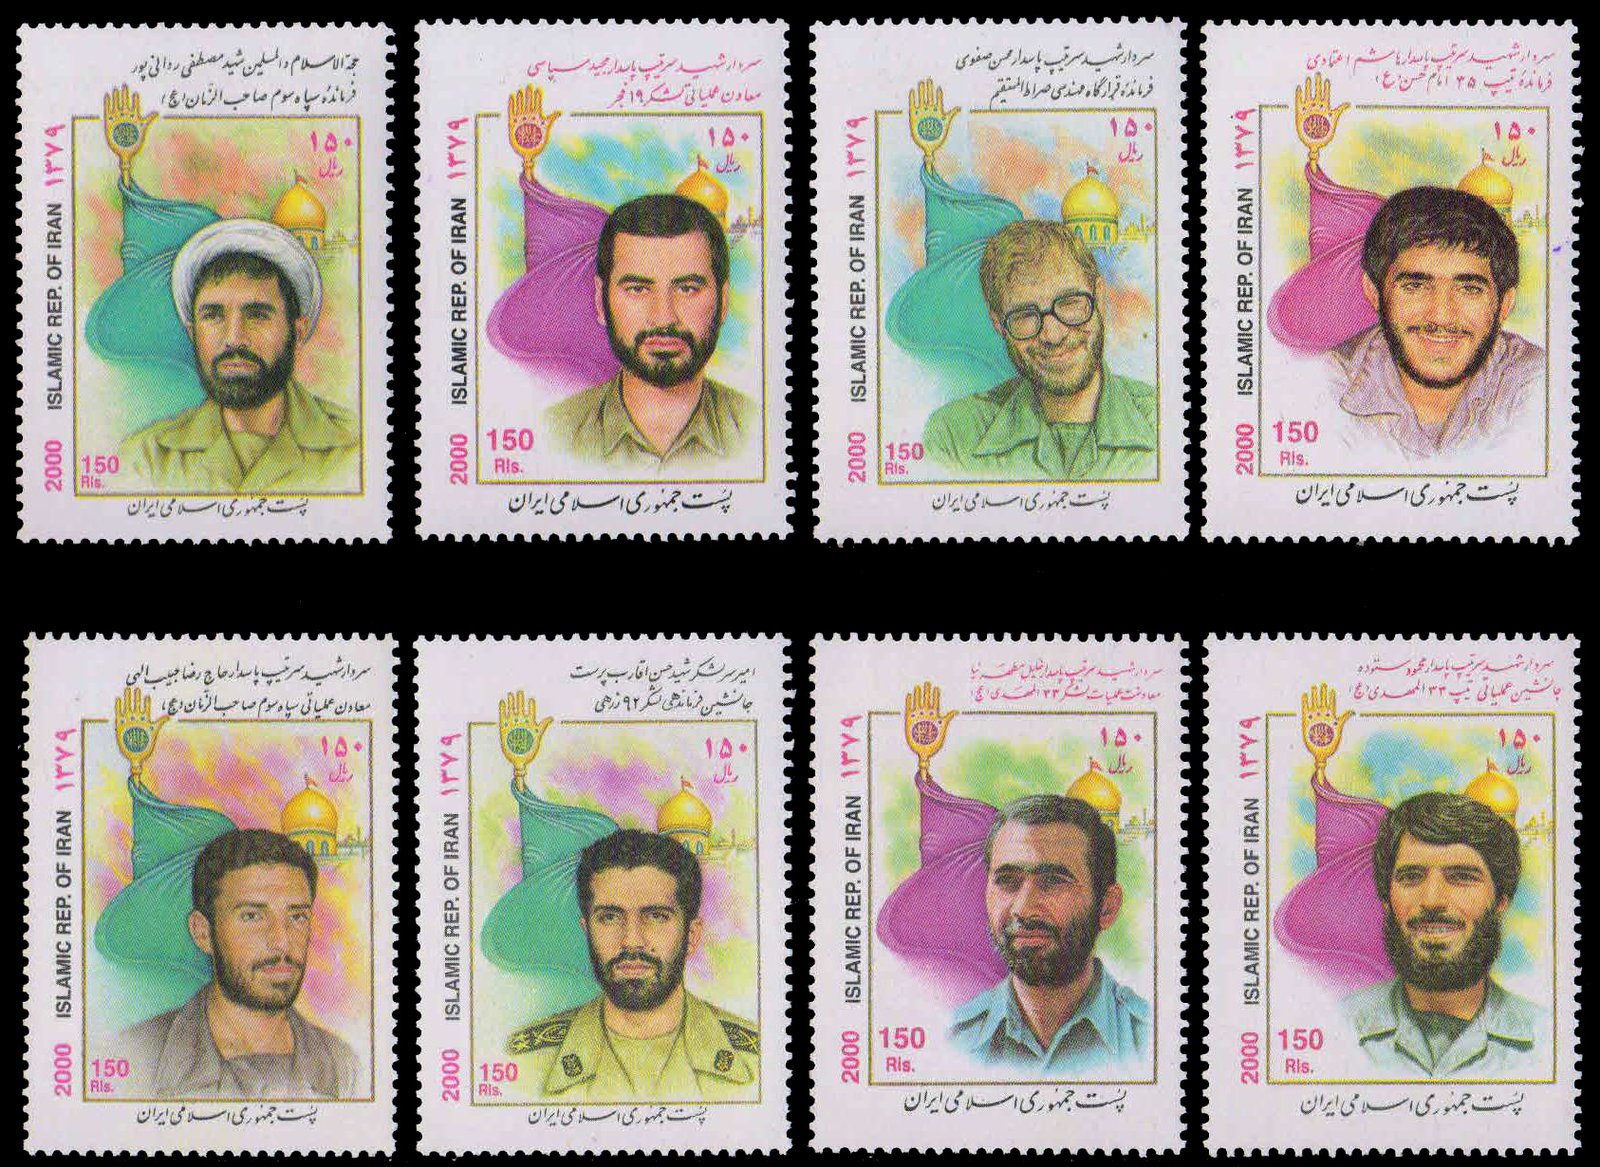 IRAN 2000-Revolutionaries, Set of 3, MNH, S.G. 3029-3032, 3034-3037-Cat £ 10-